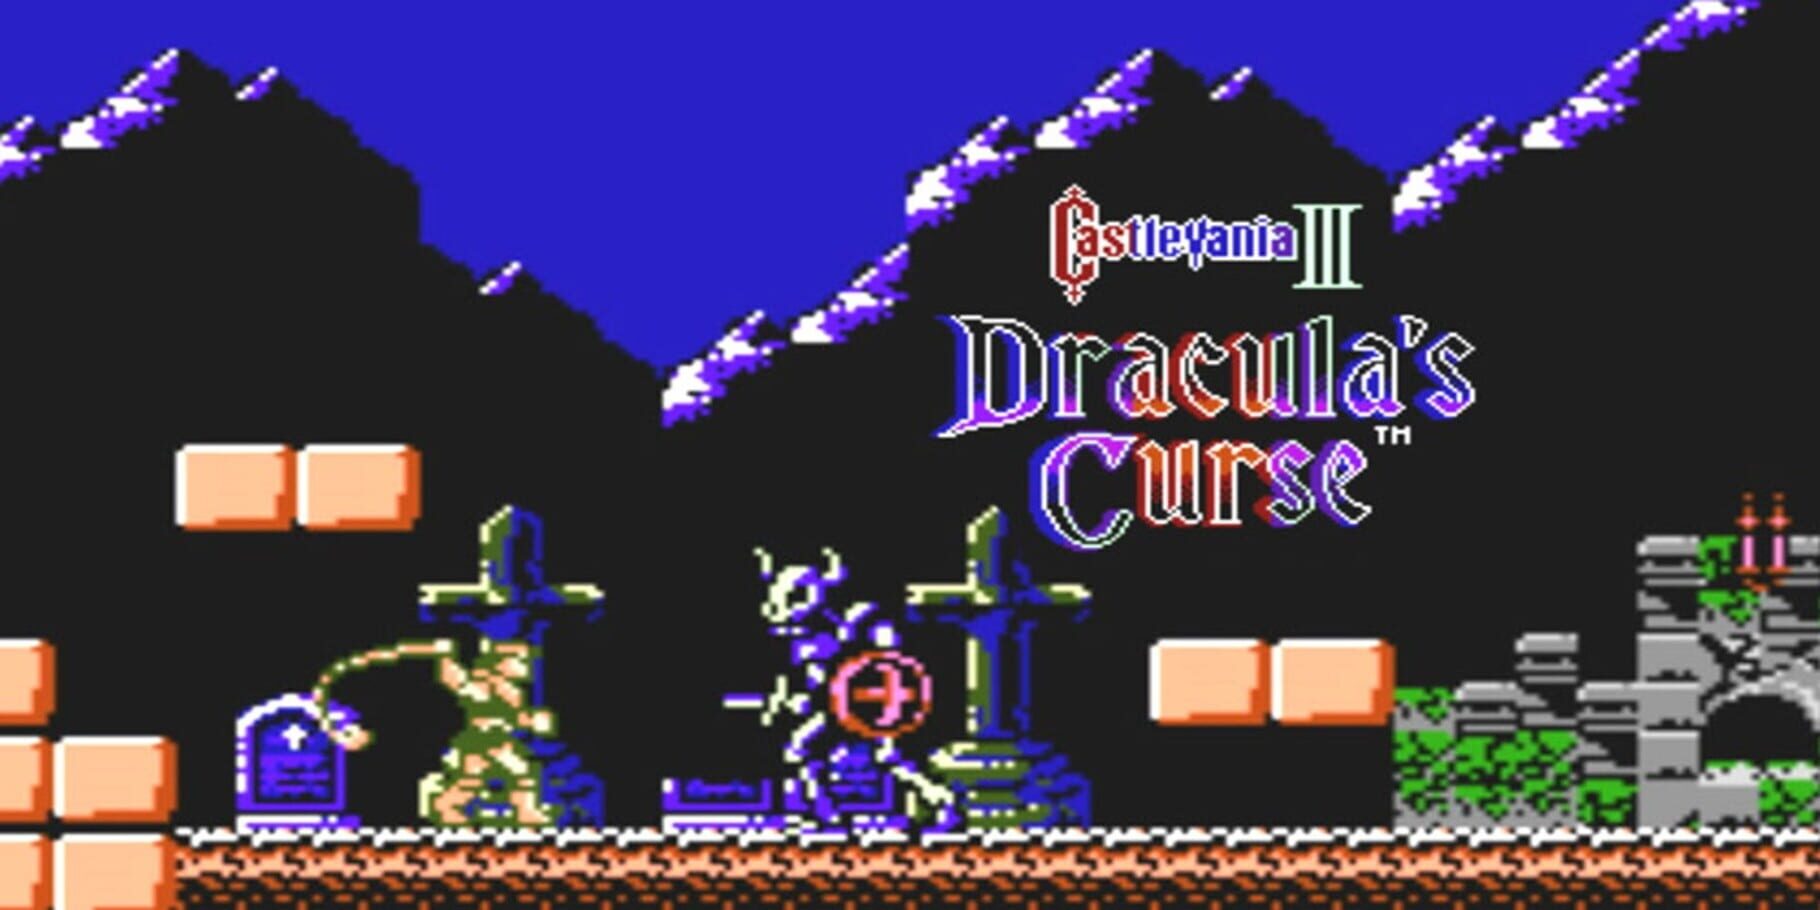 Castlevania III: Dracula's Curse artwork